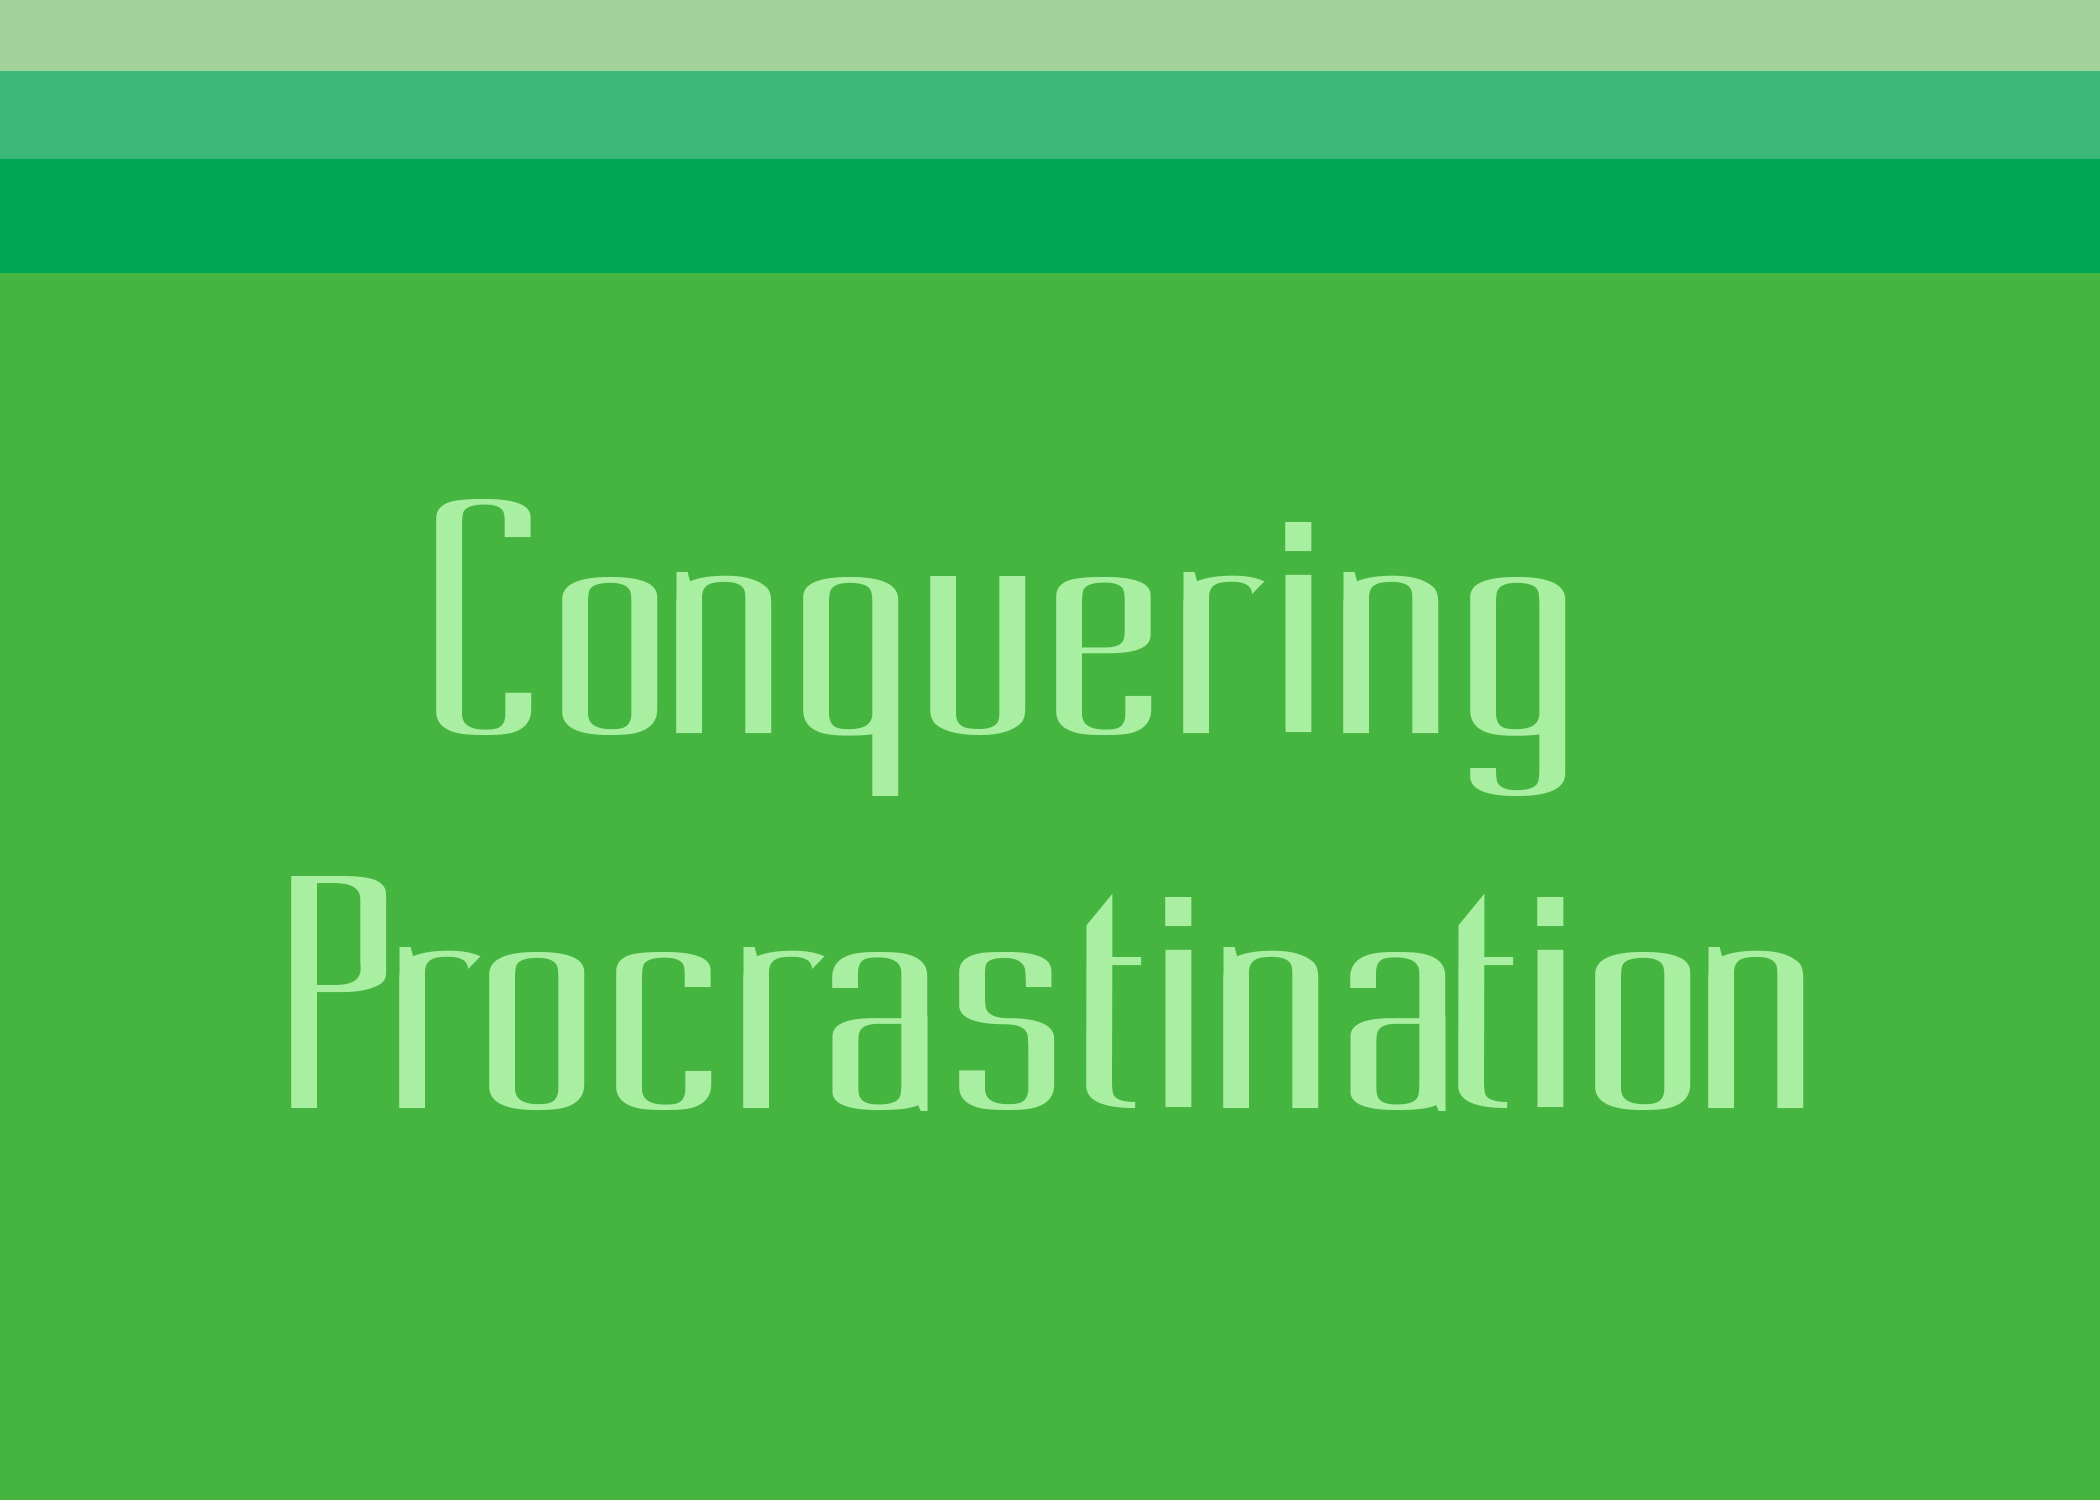 title procrastination